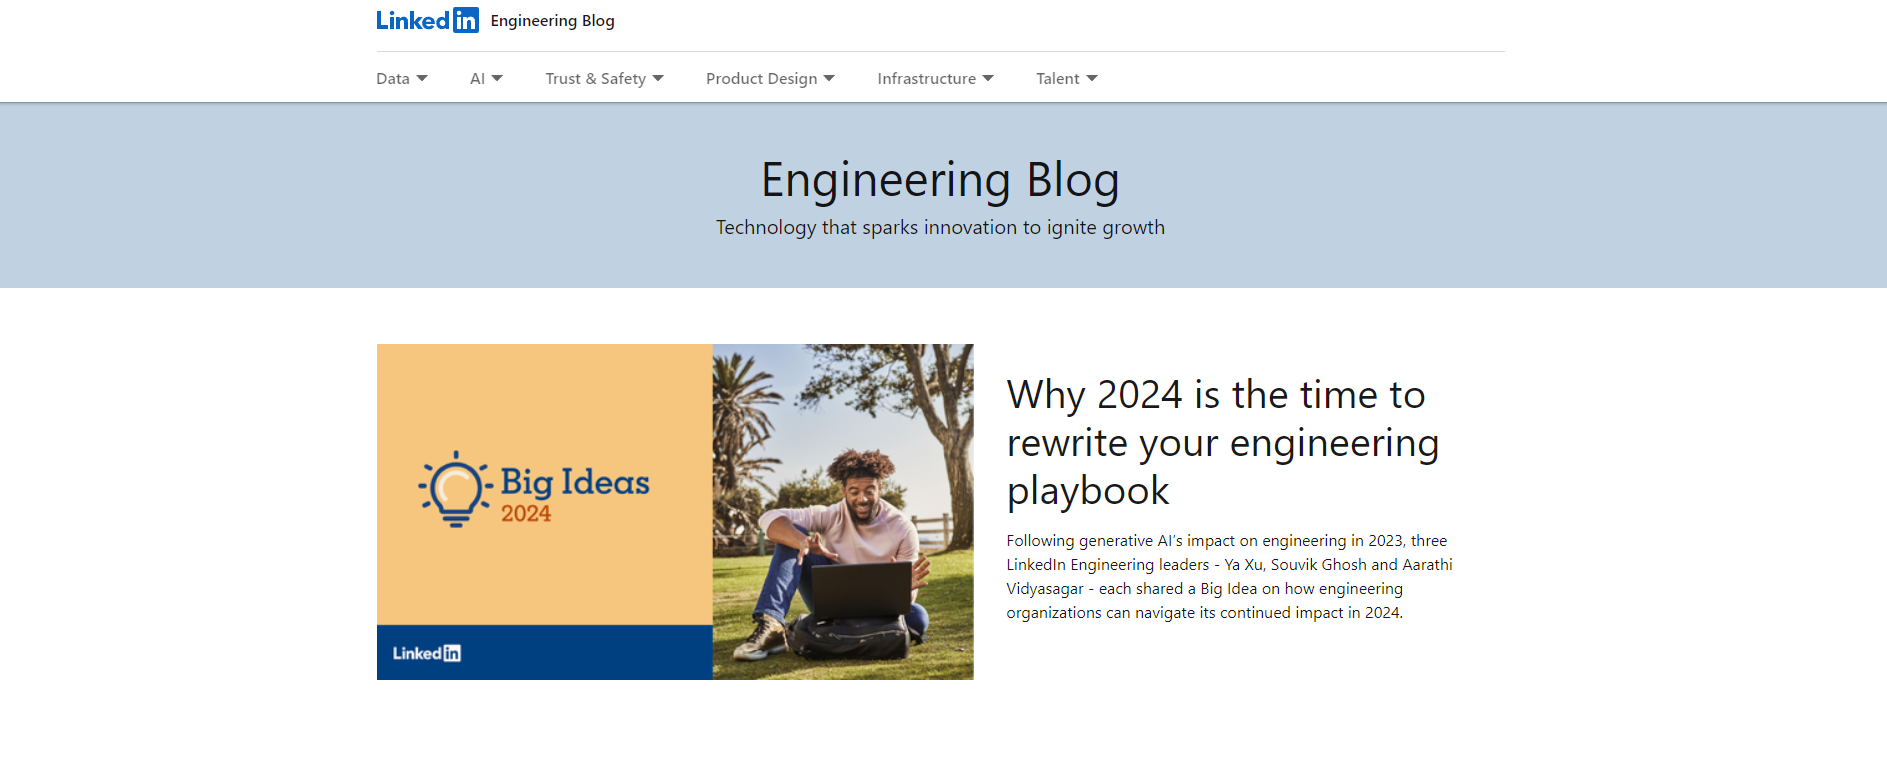 linkedin-engineering-blog.png